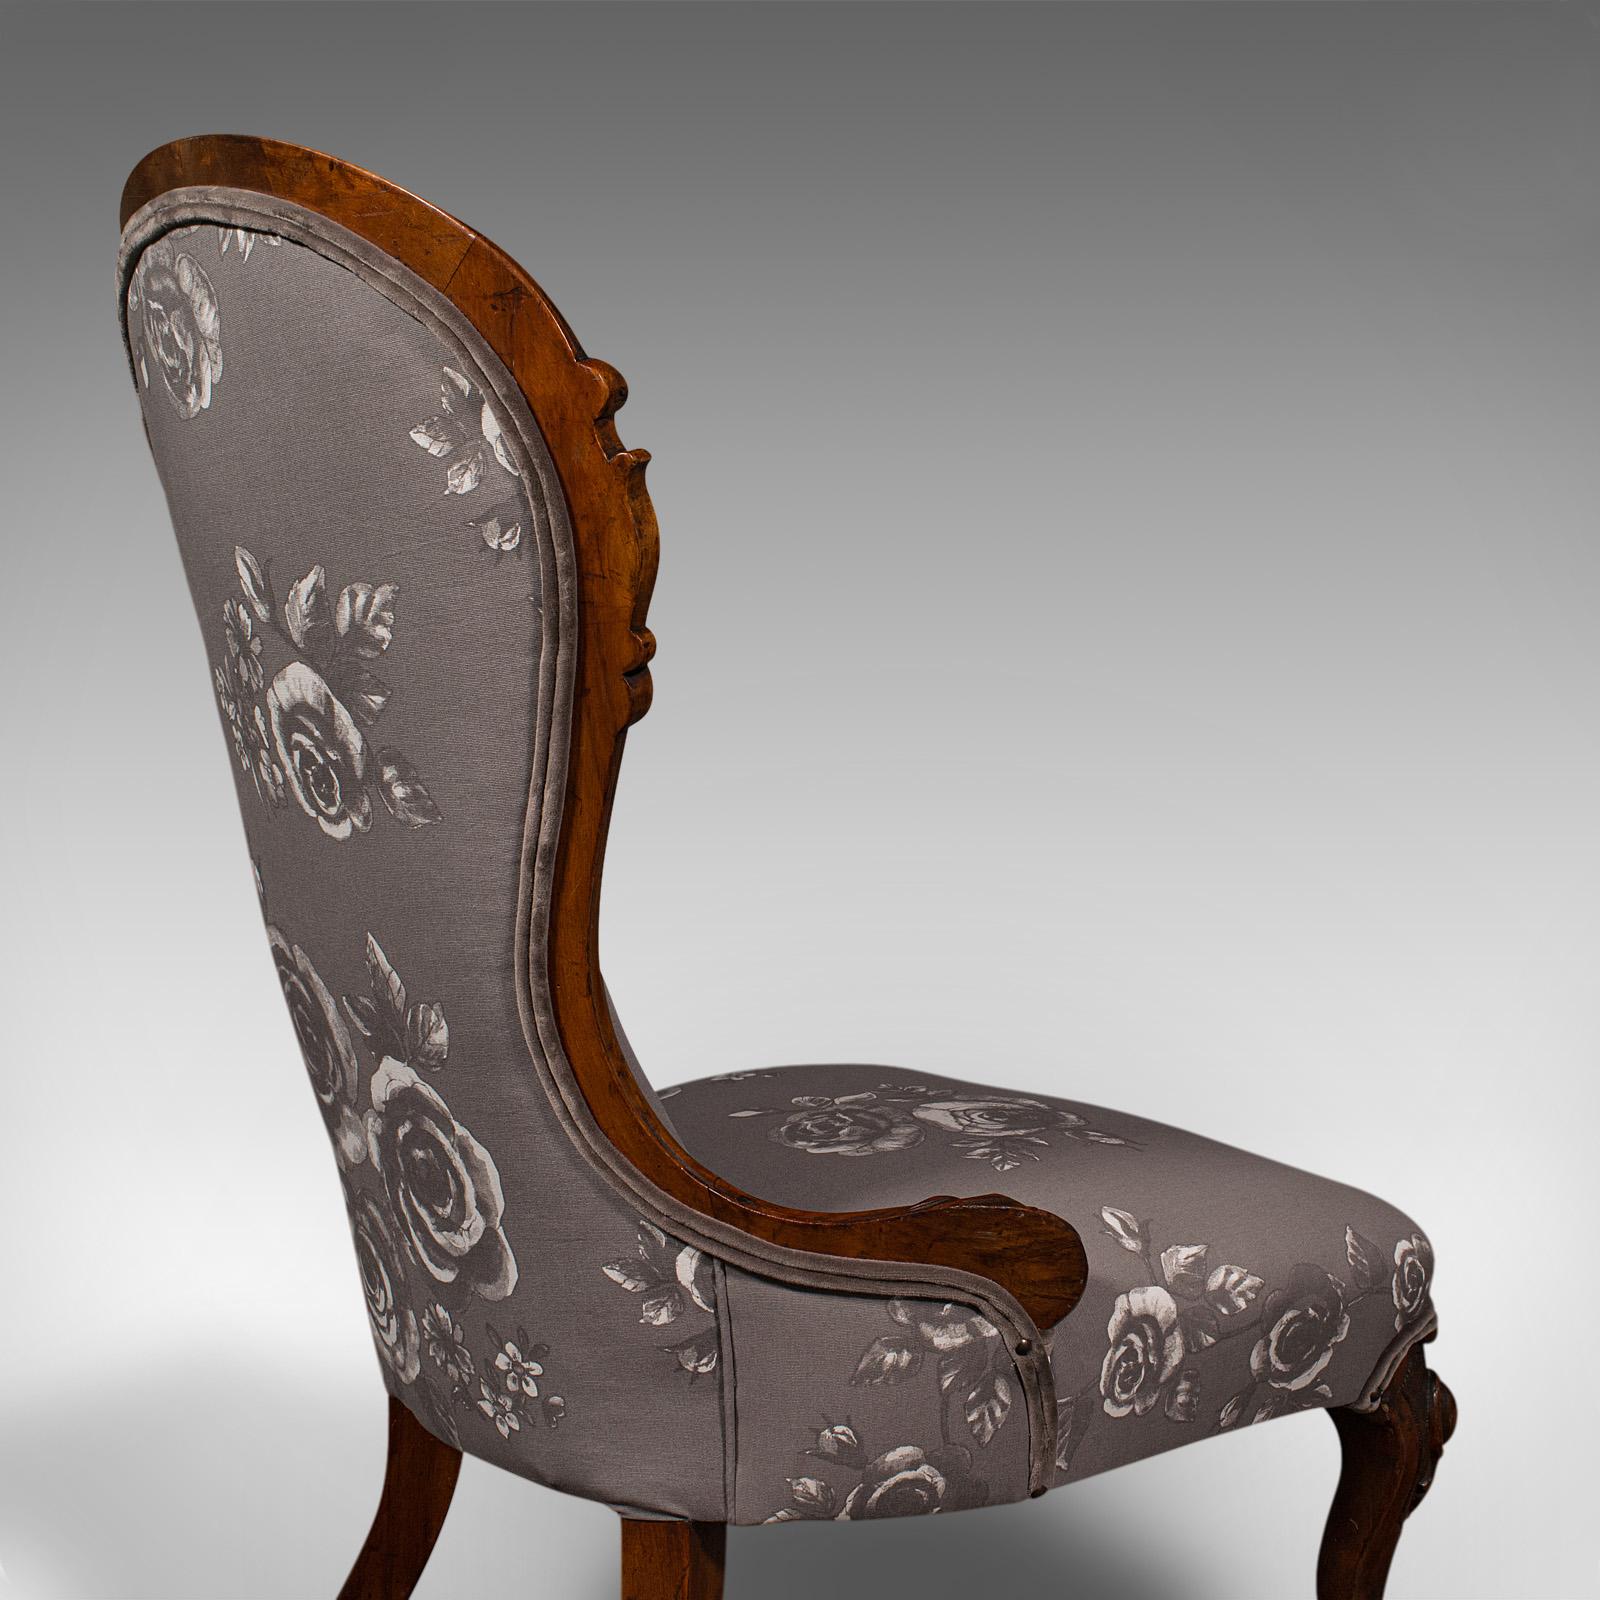 Antique Button Back Salon Chair English Walnut Spoon Seat Victorian circa 1840 For Sale 1